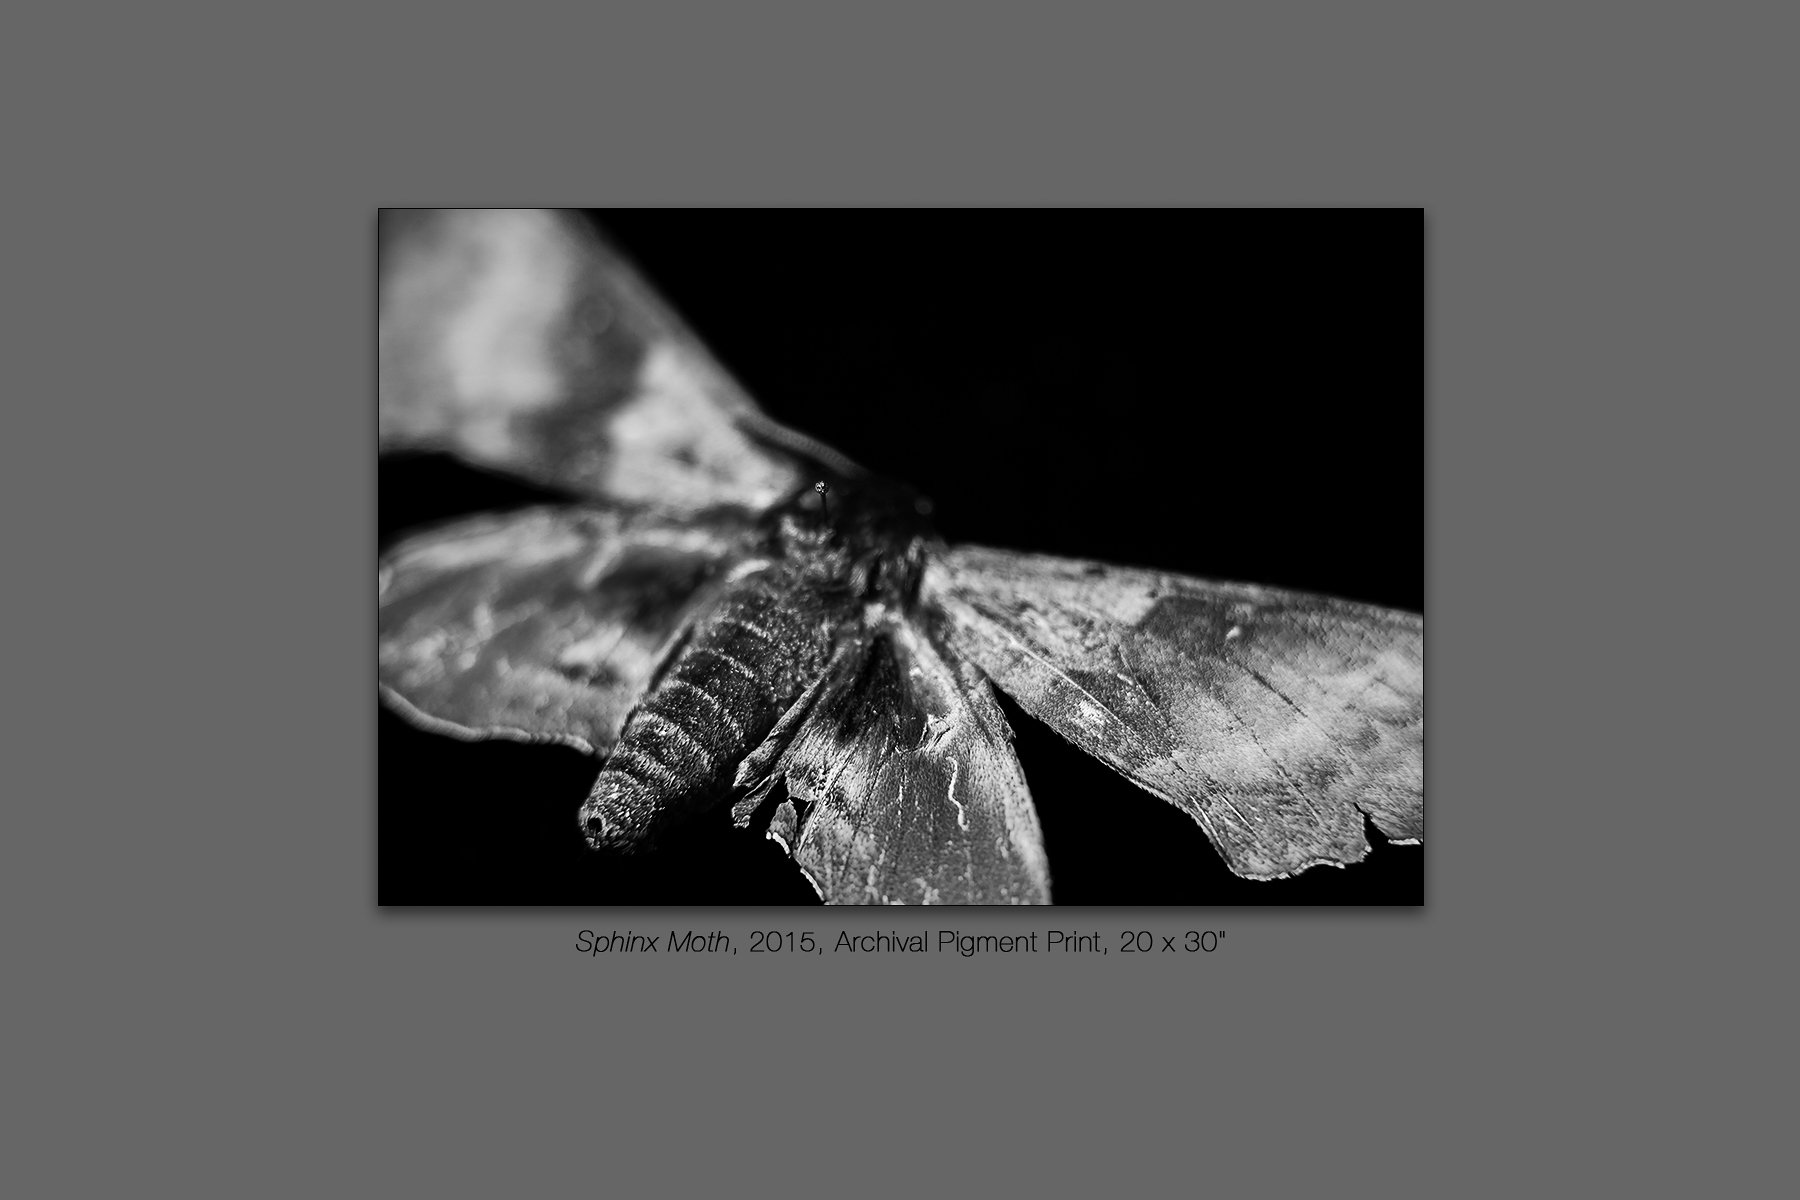 Sphinx Moth, 2015